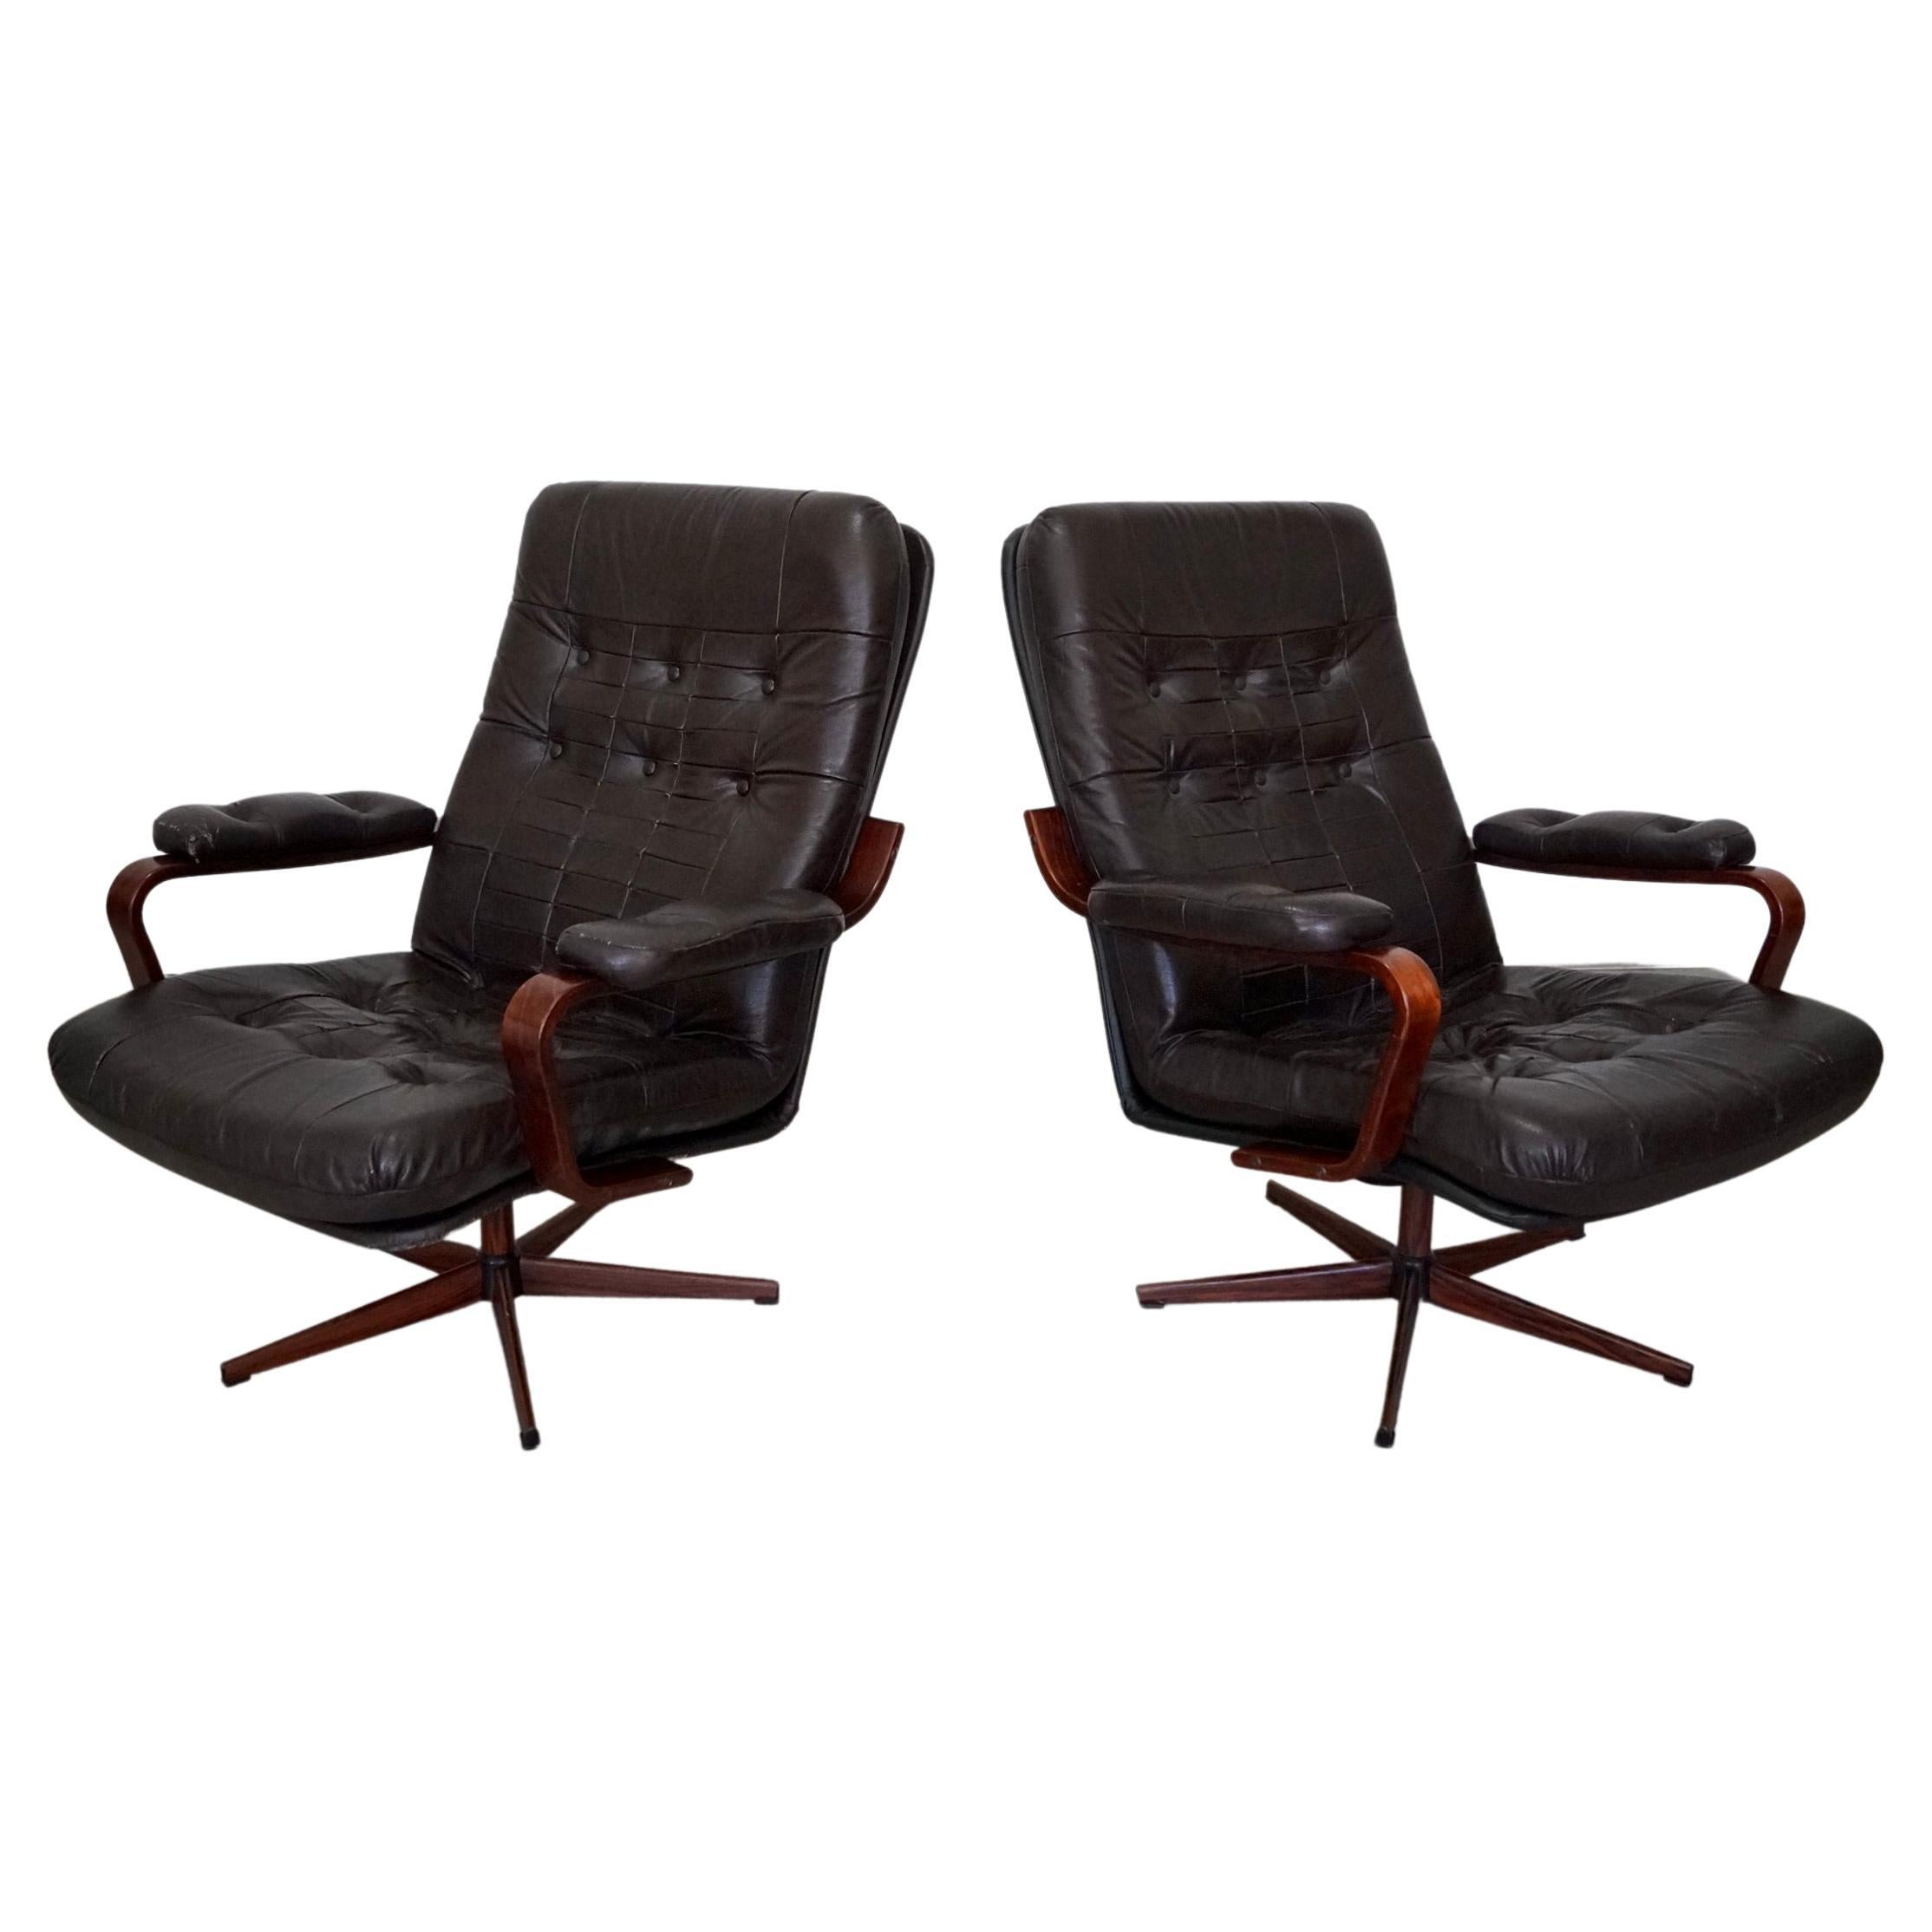 1960's Danish Modern Leather Lounge Chairs